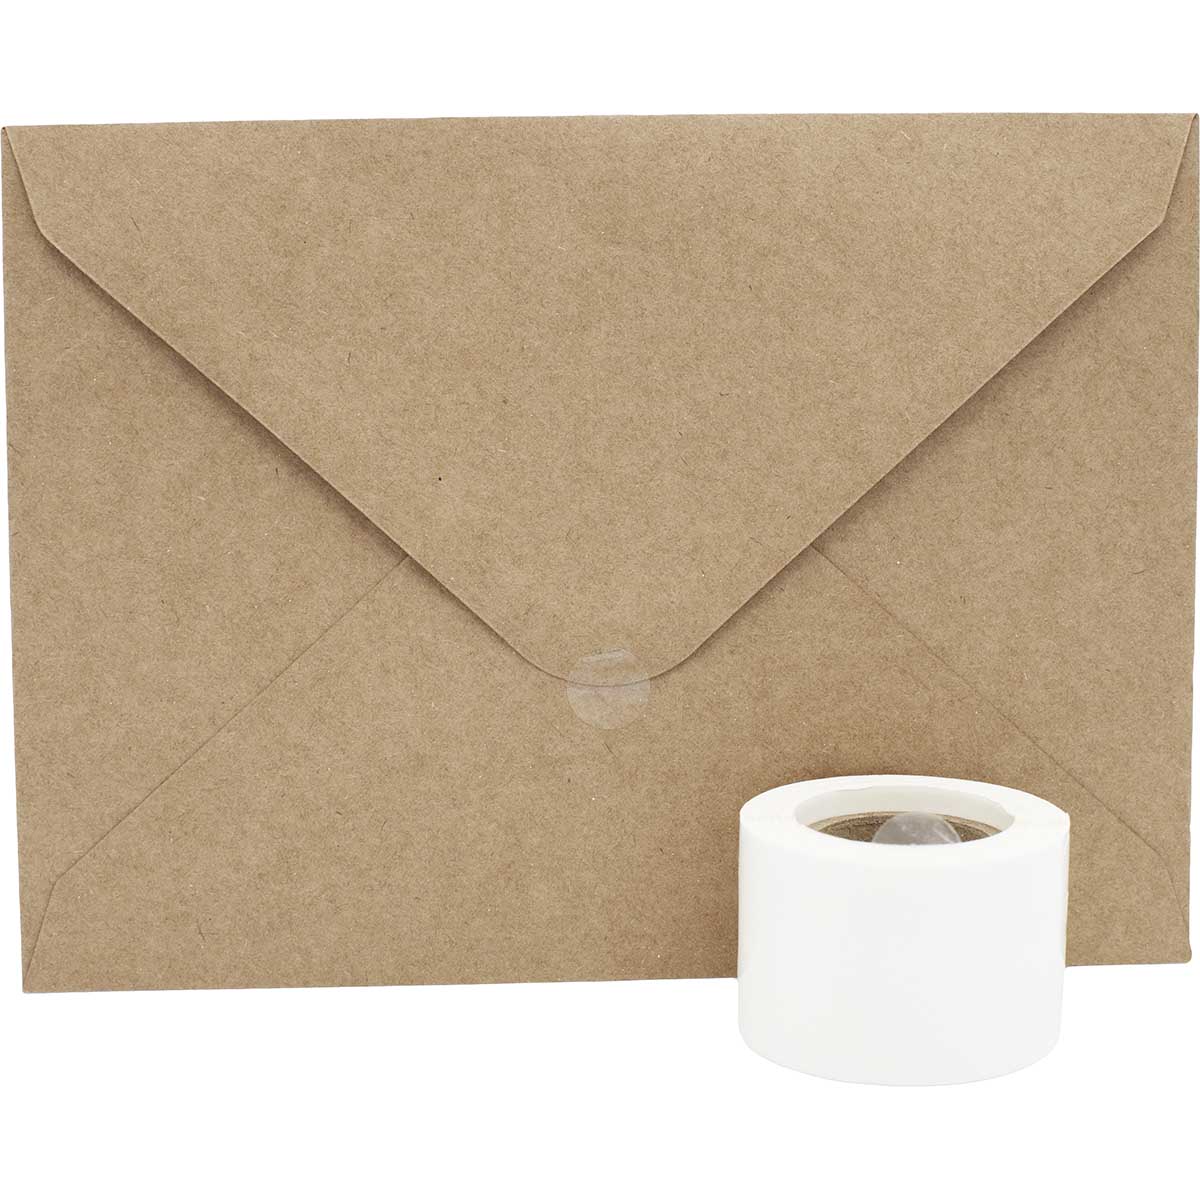 Self Seal Envelope - Packaging Security Seals - Choose Your